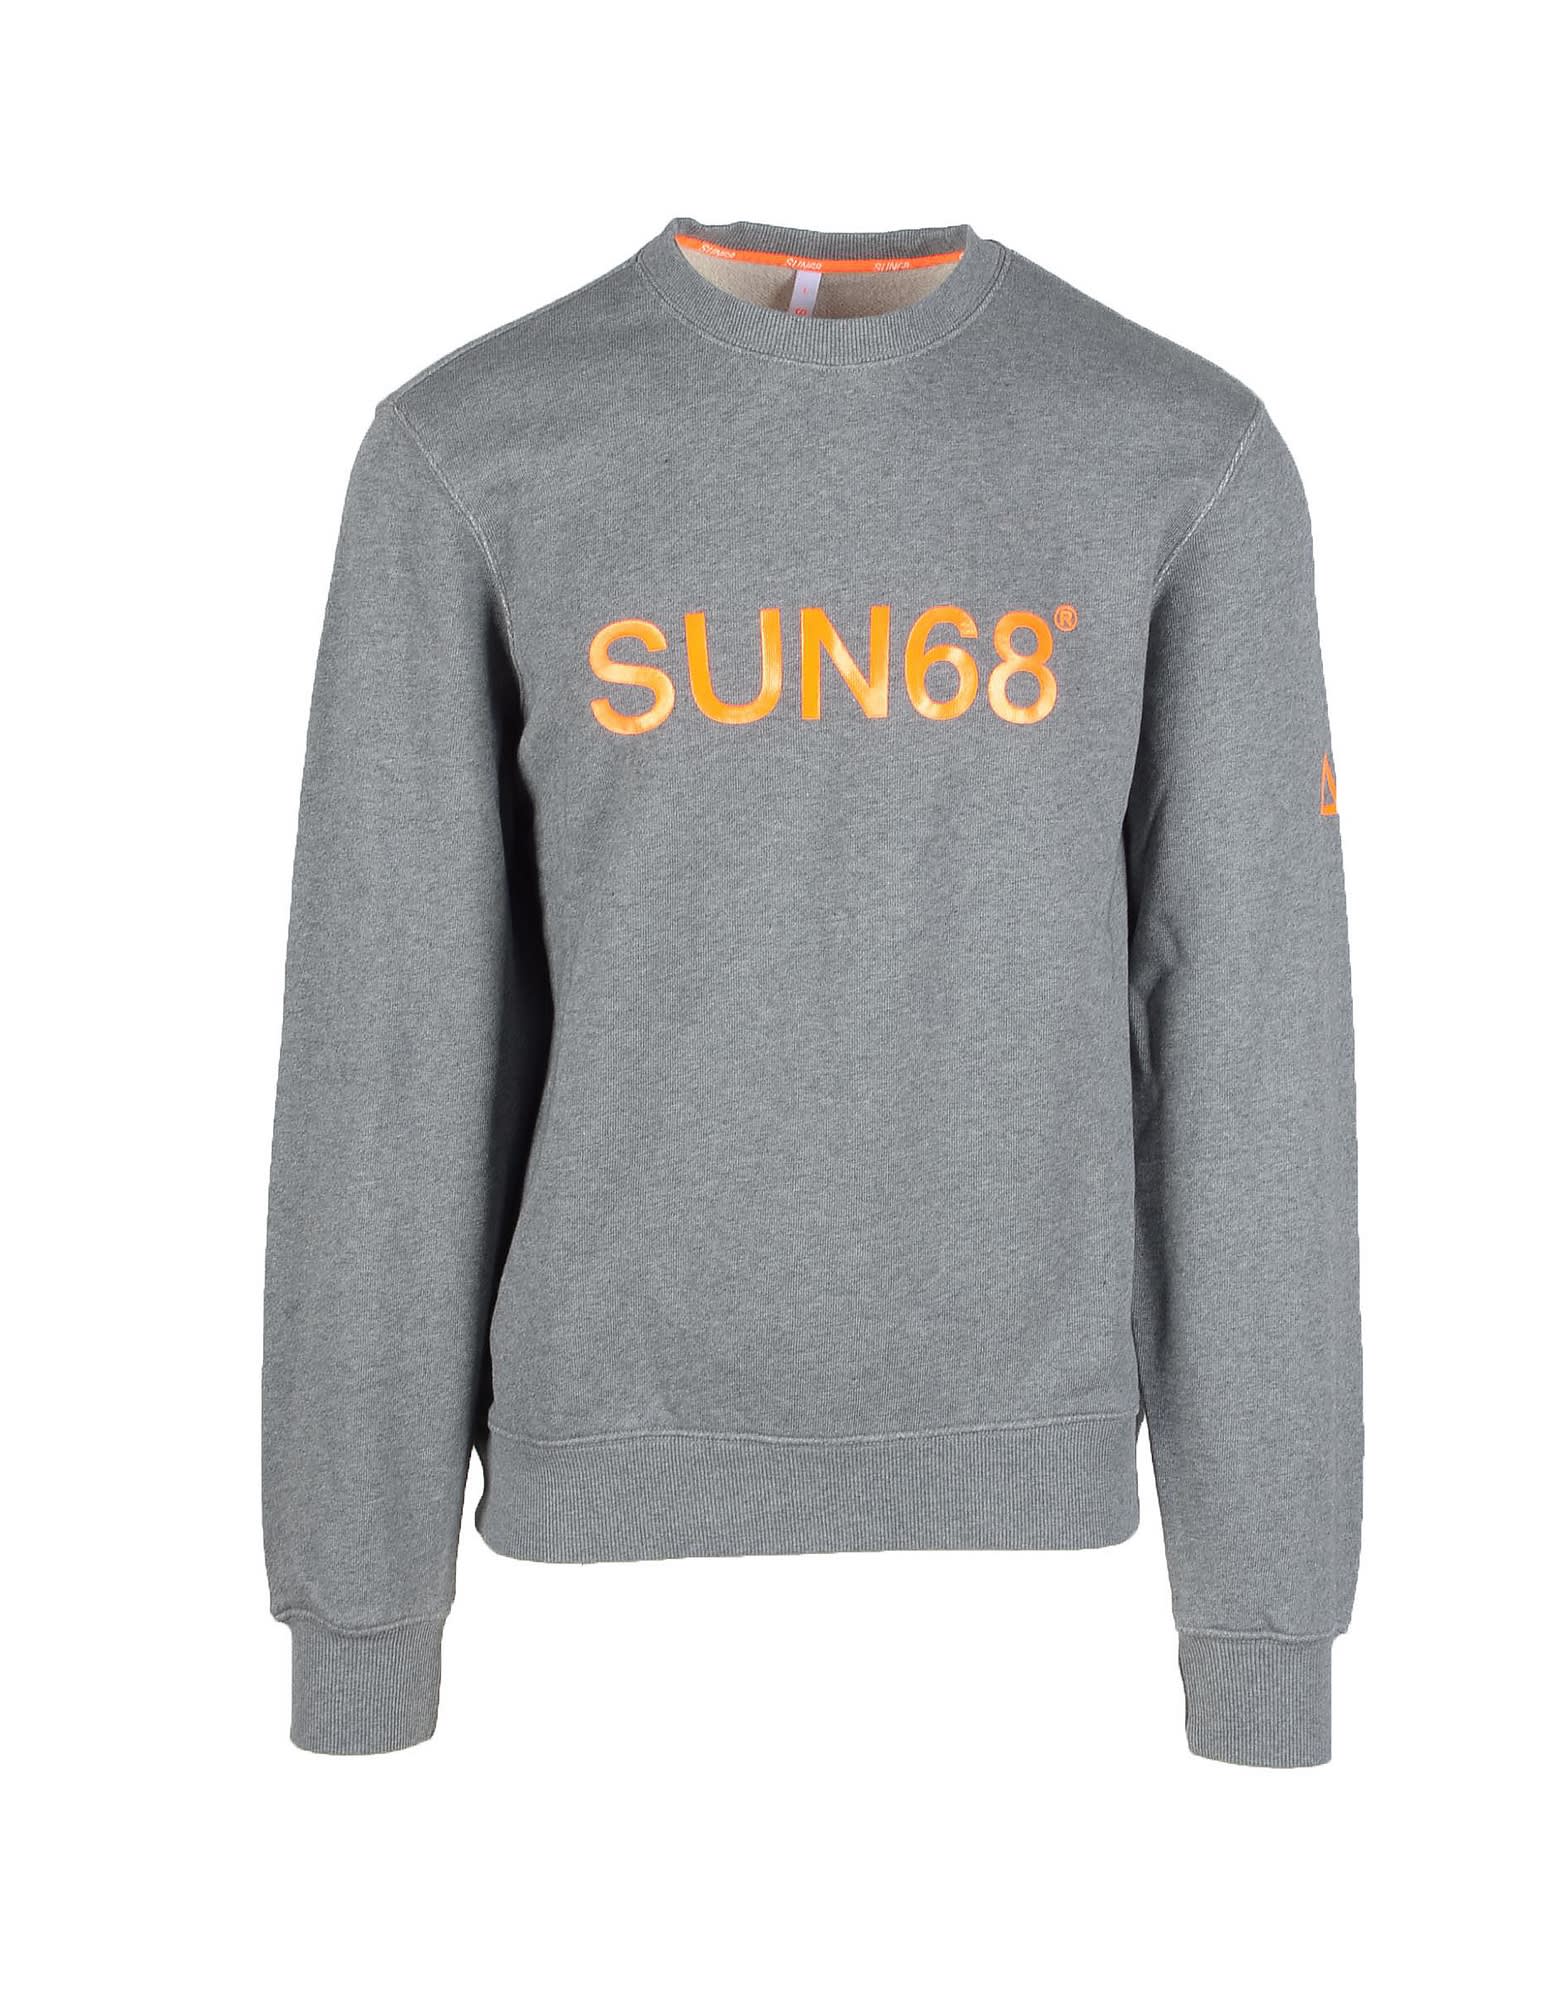 Sun 68 Mens Gray Sweatshirt